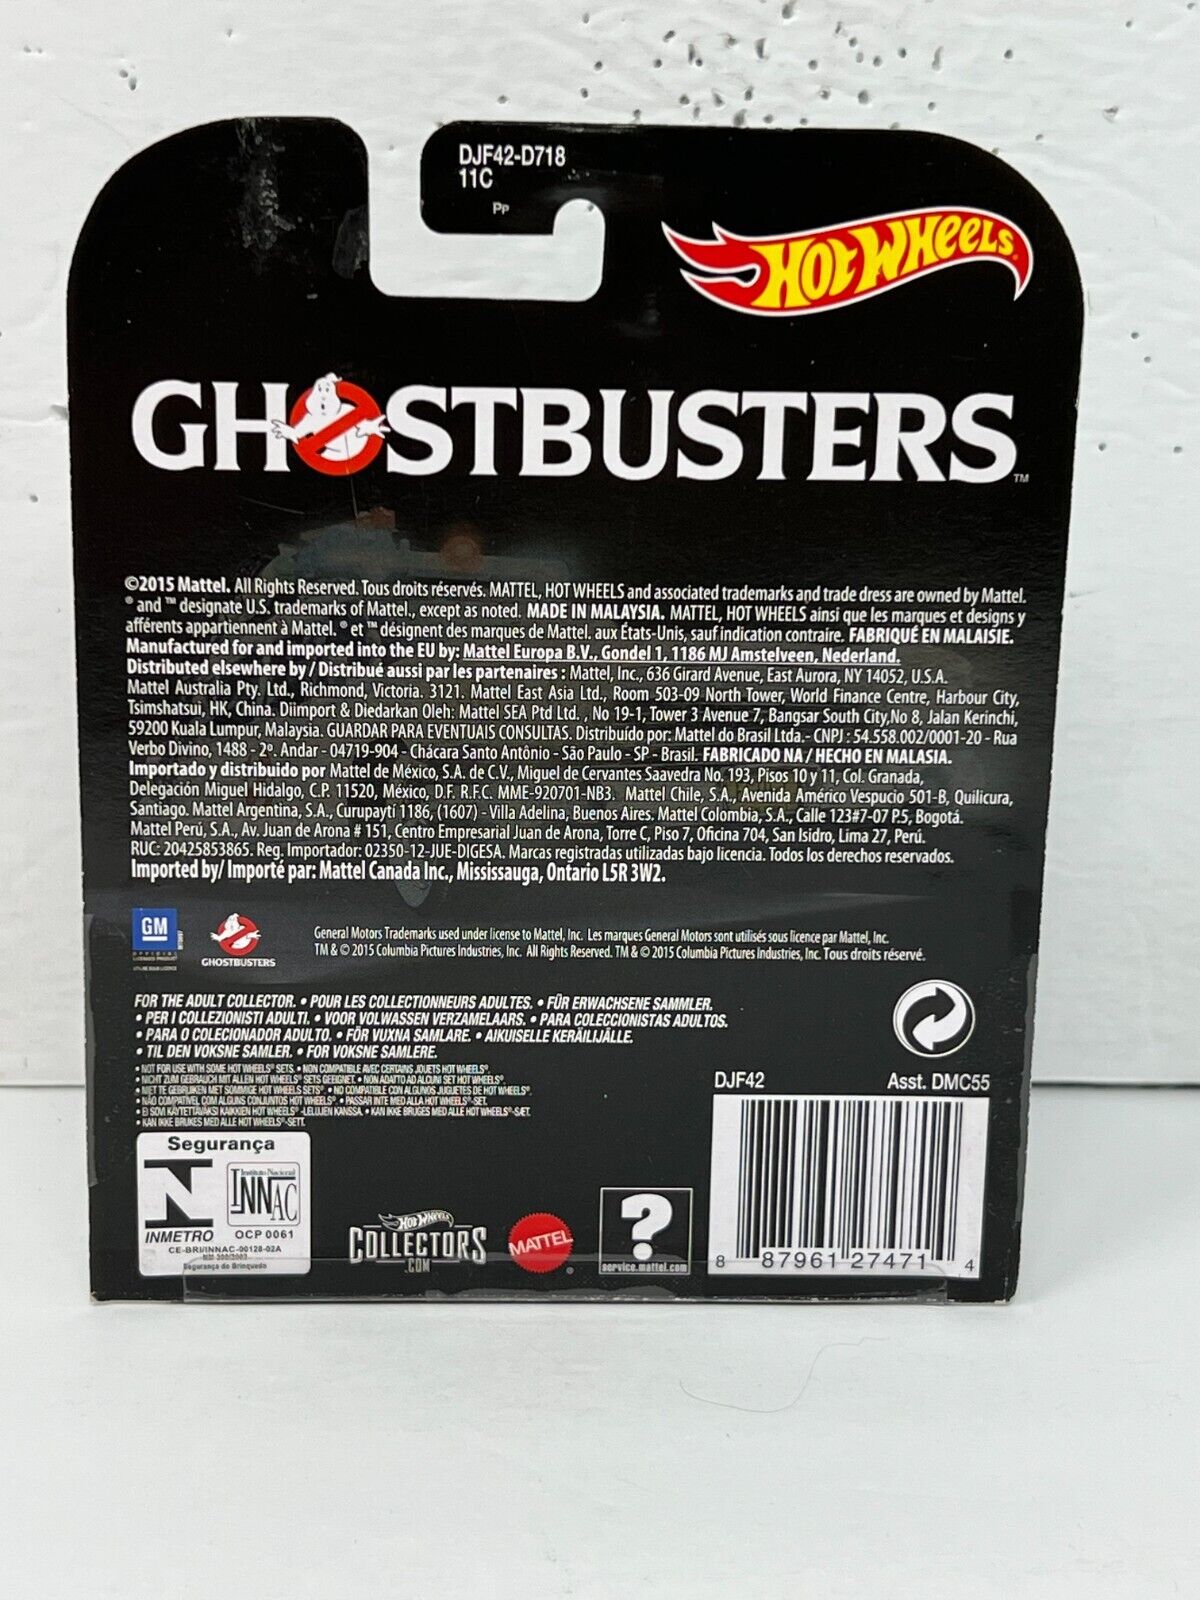 Hot Wheels Retro Entertainment Ghostbusters Ecto-1 1:64 Diecast